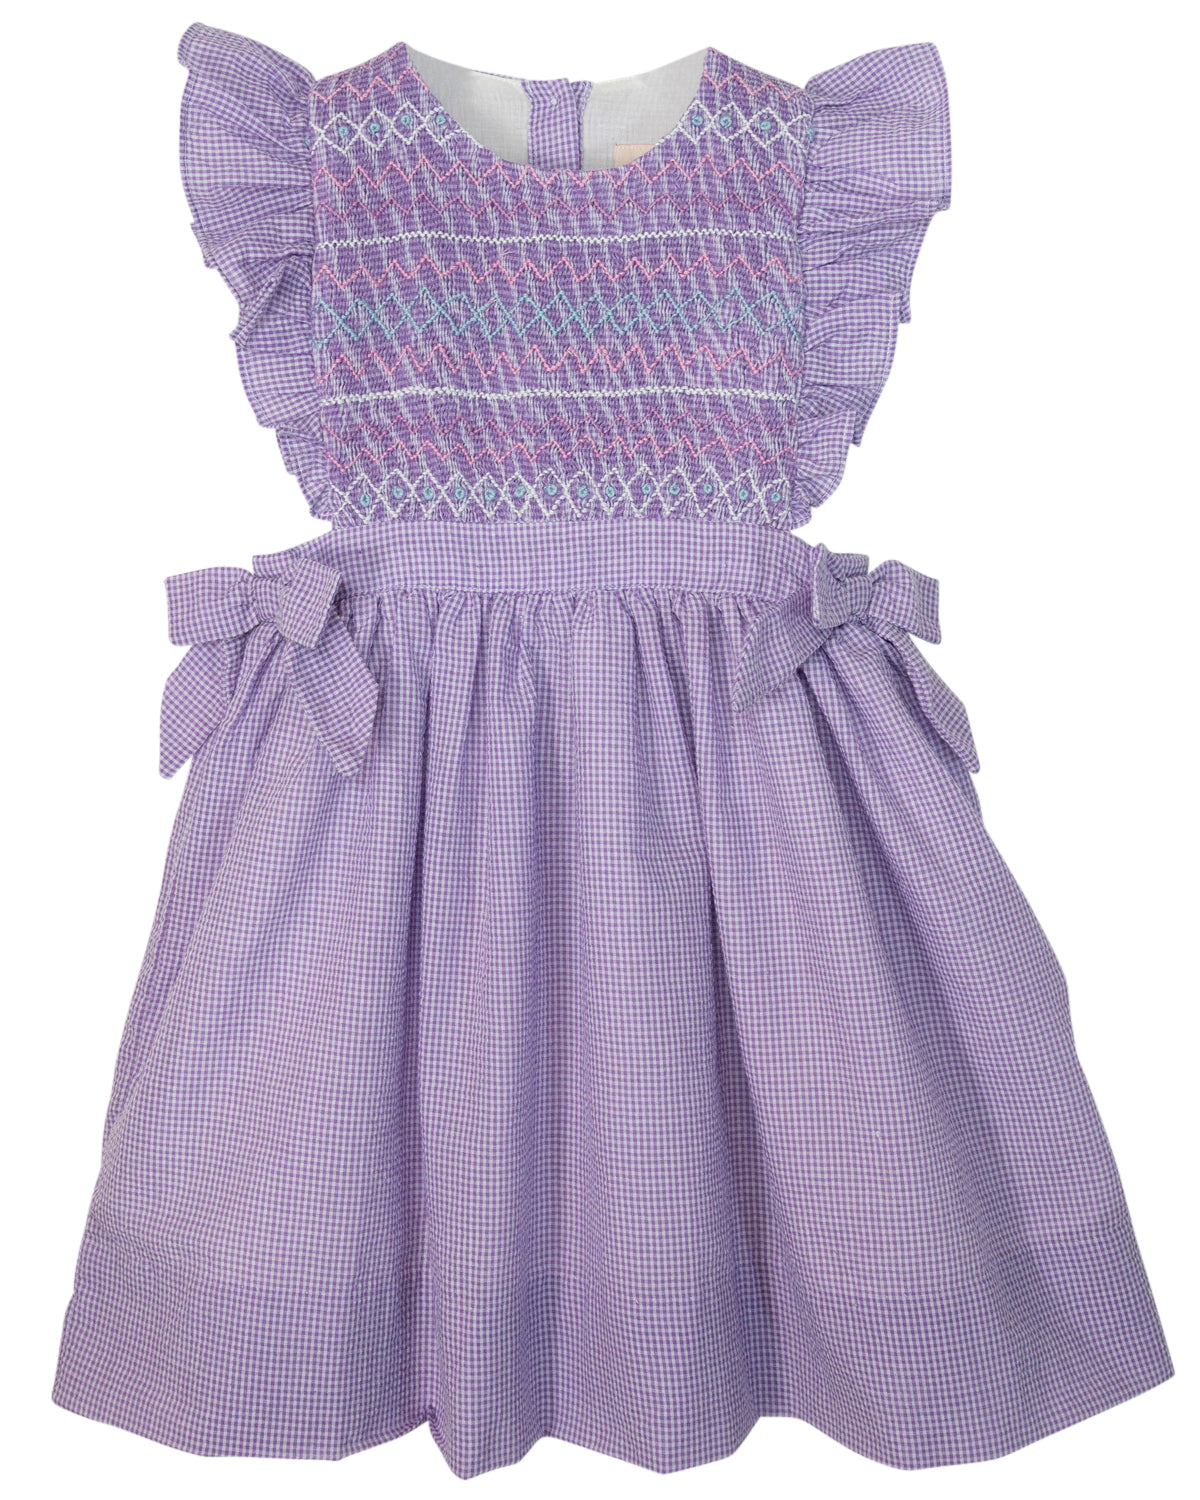 Purple Seersucker Dress with Rainbow Smocking- FINAL SALE